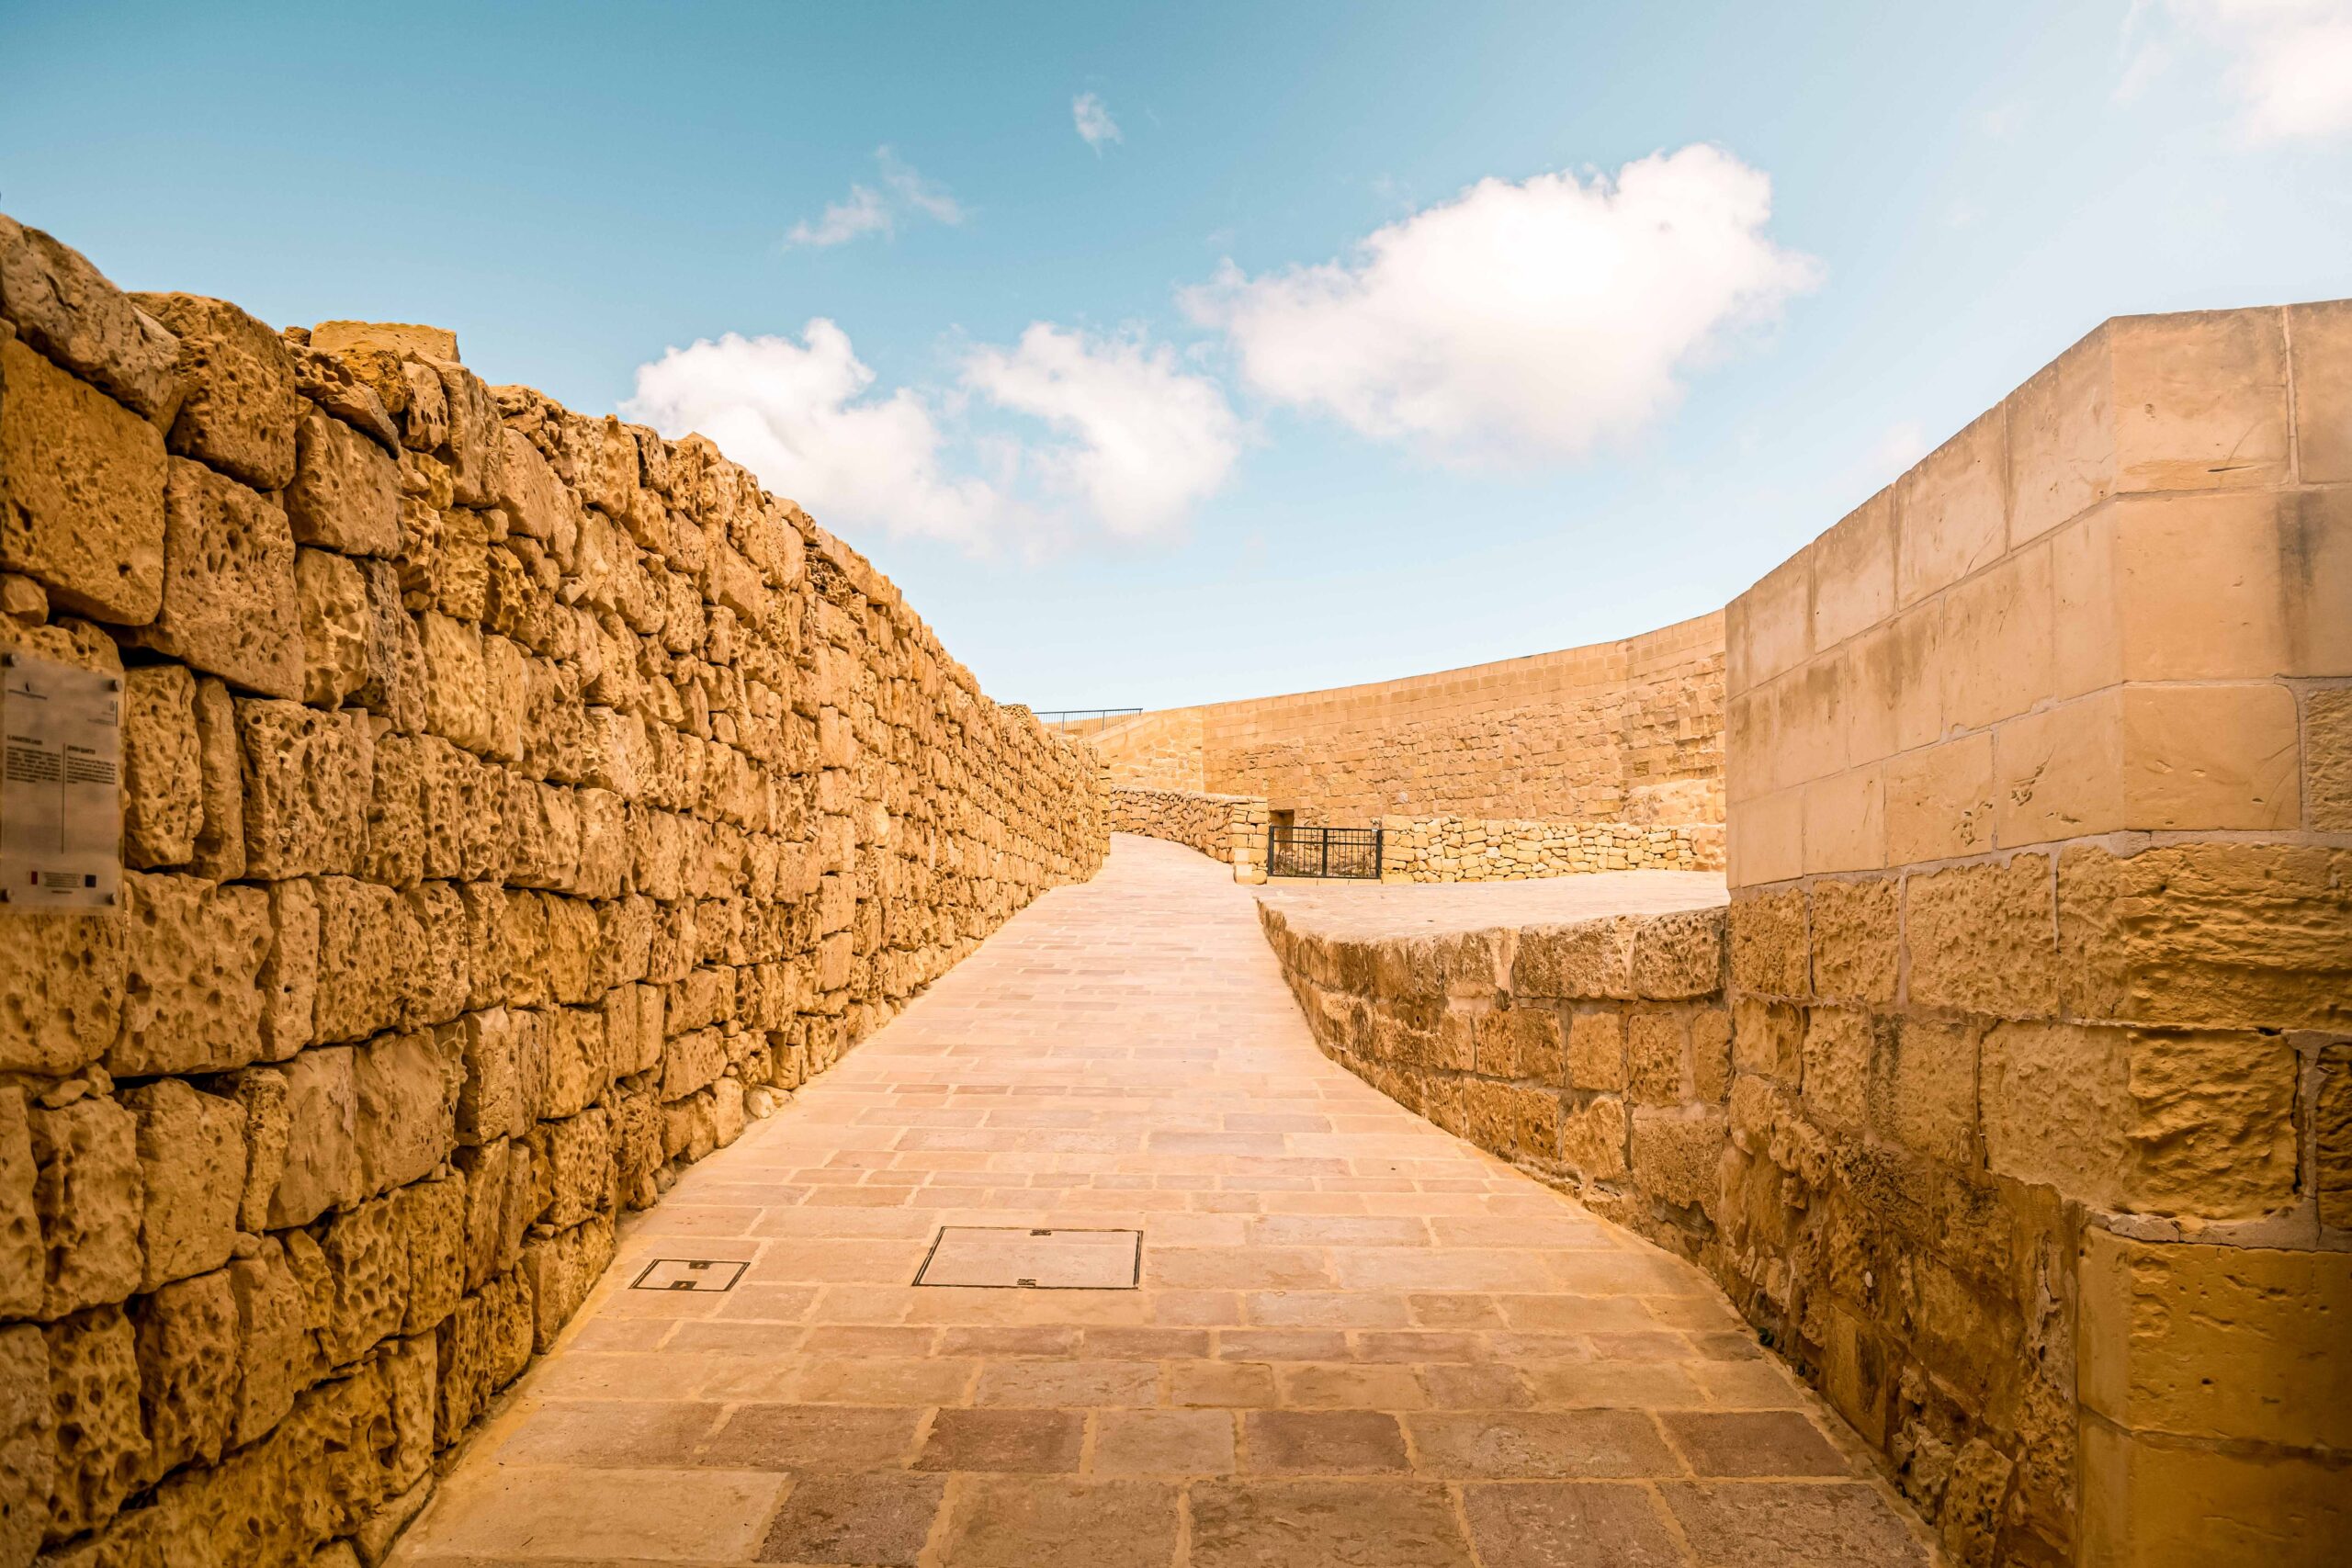 Ramparts walls of the Ciutadella in Victoria (Ir-Rabat) on Gozo island, Malta